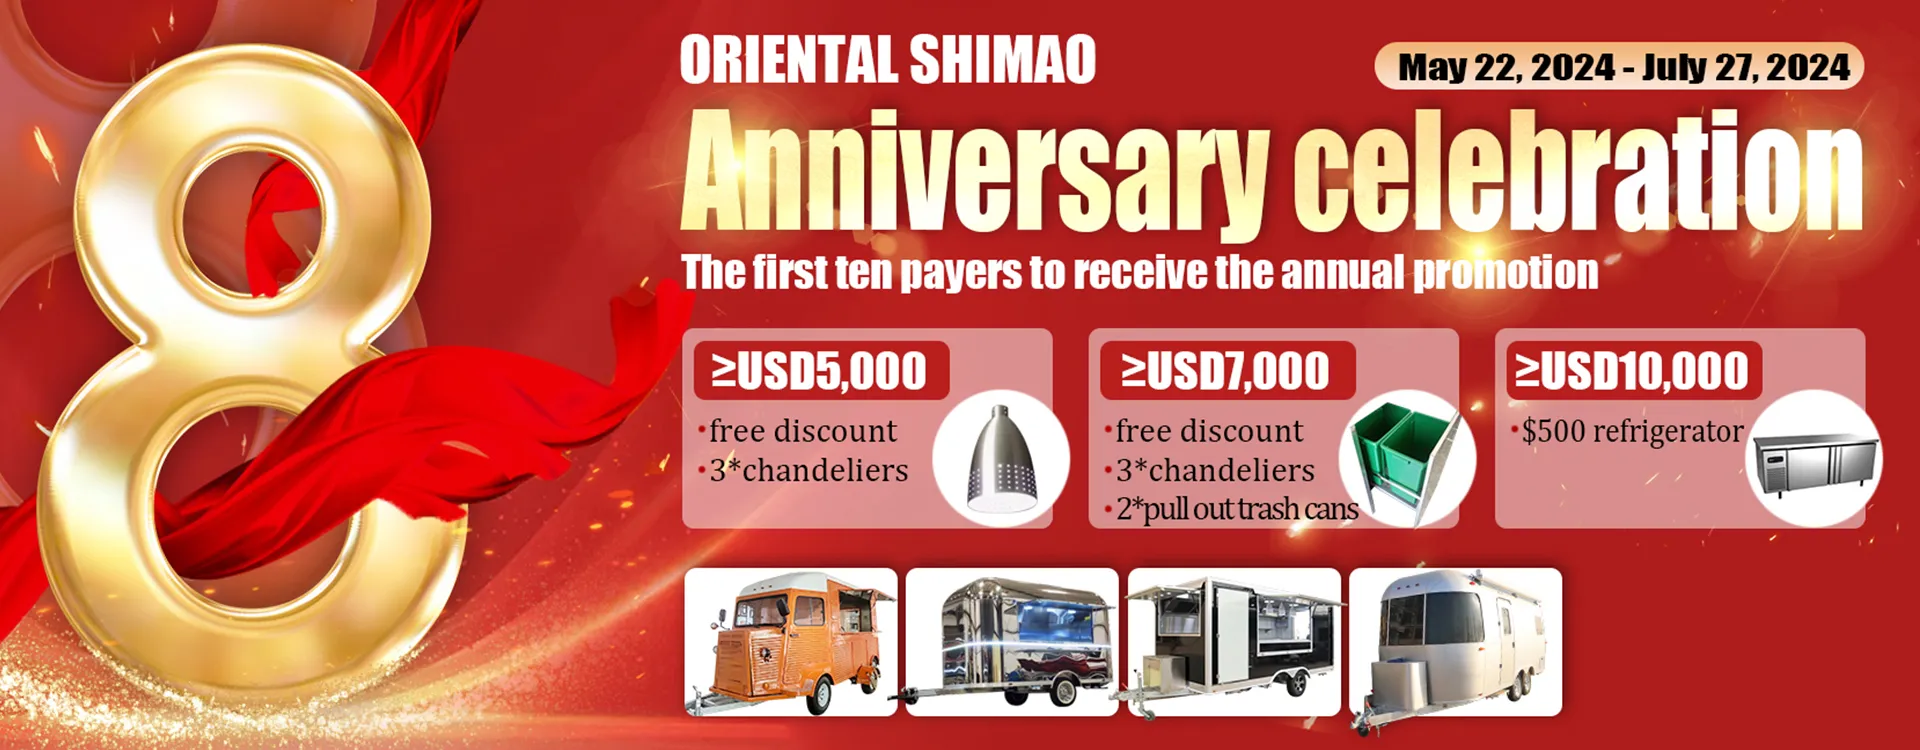 Oriental Shimao Group's 8th Anniversary Celebration